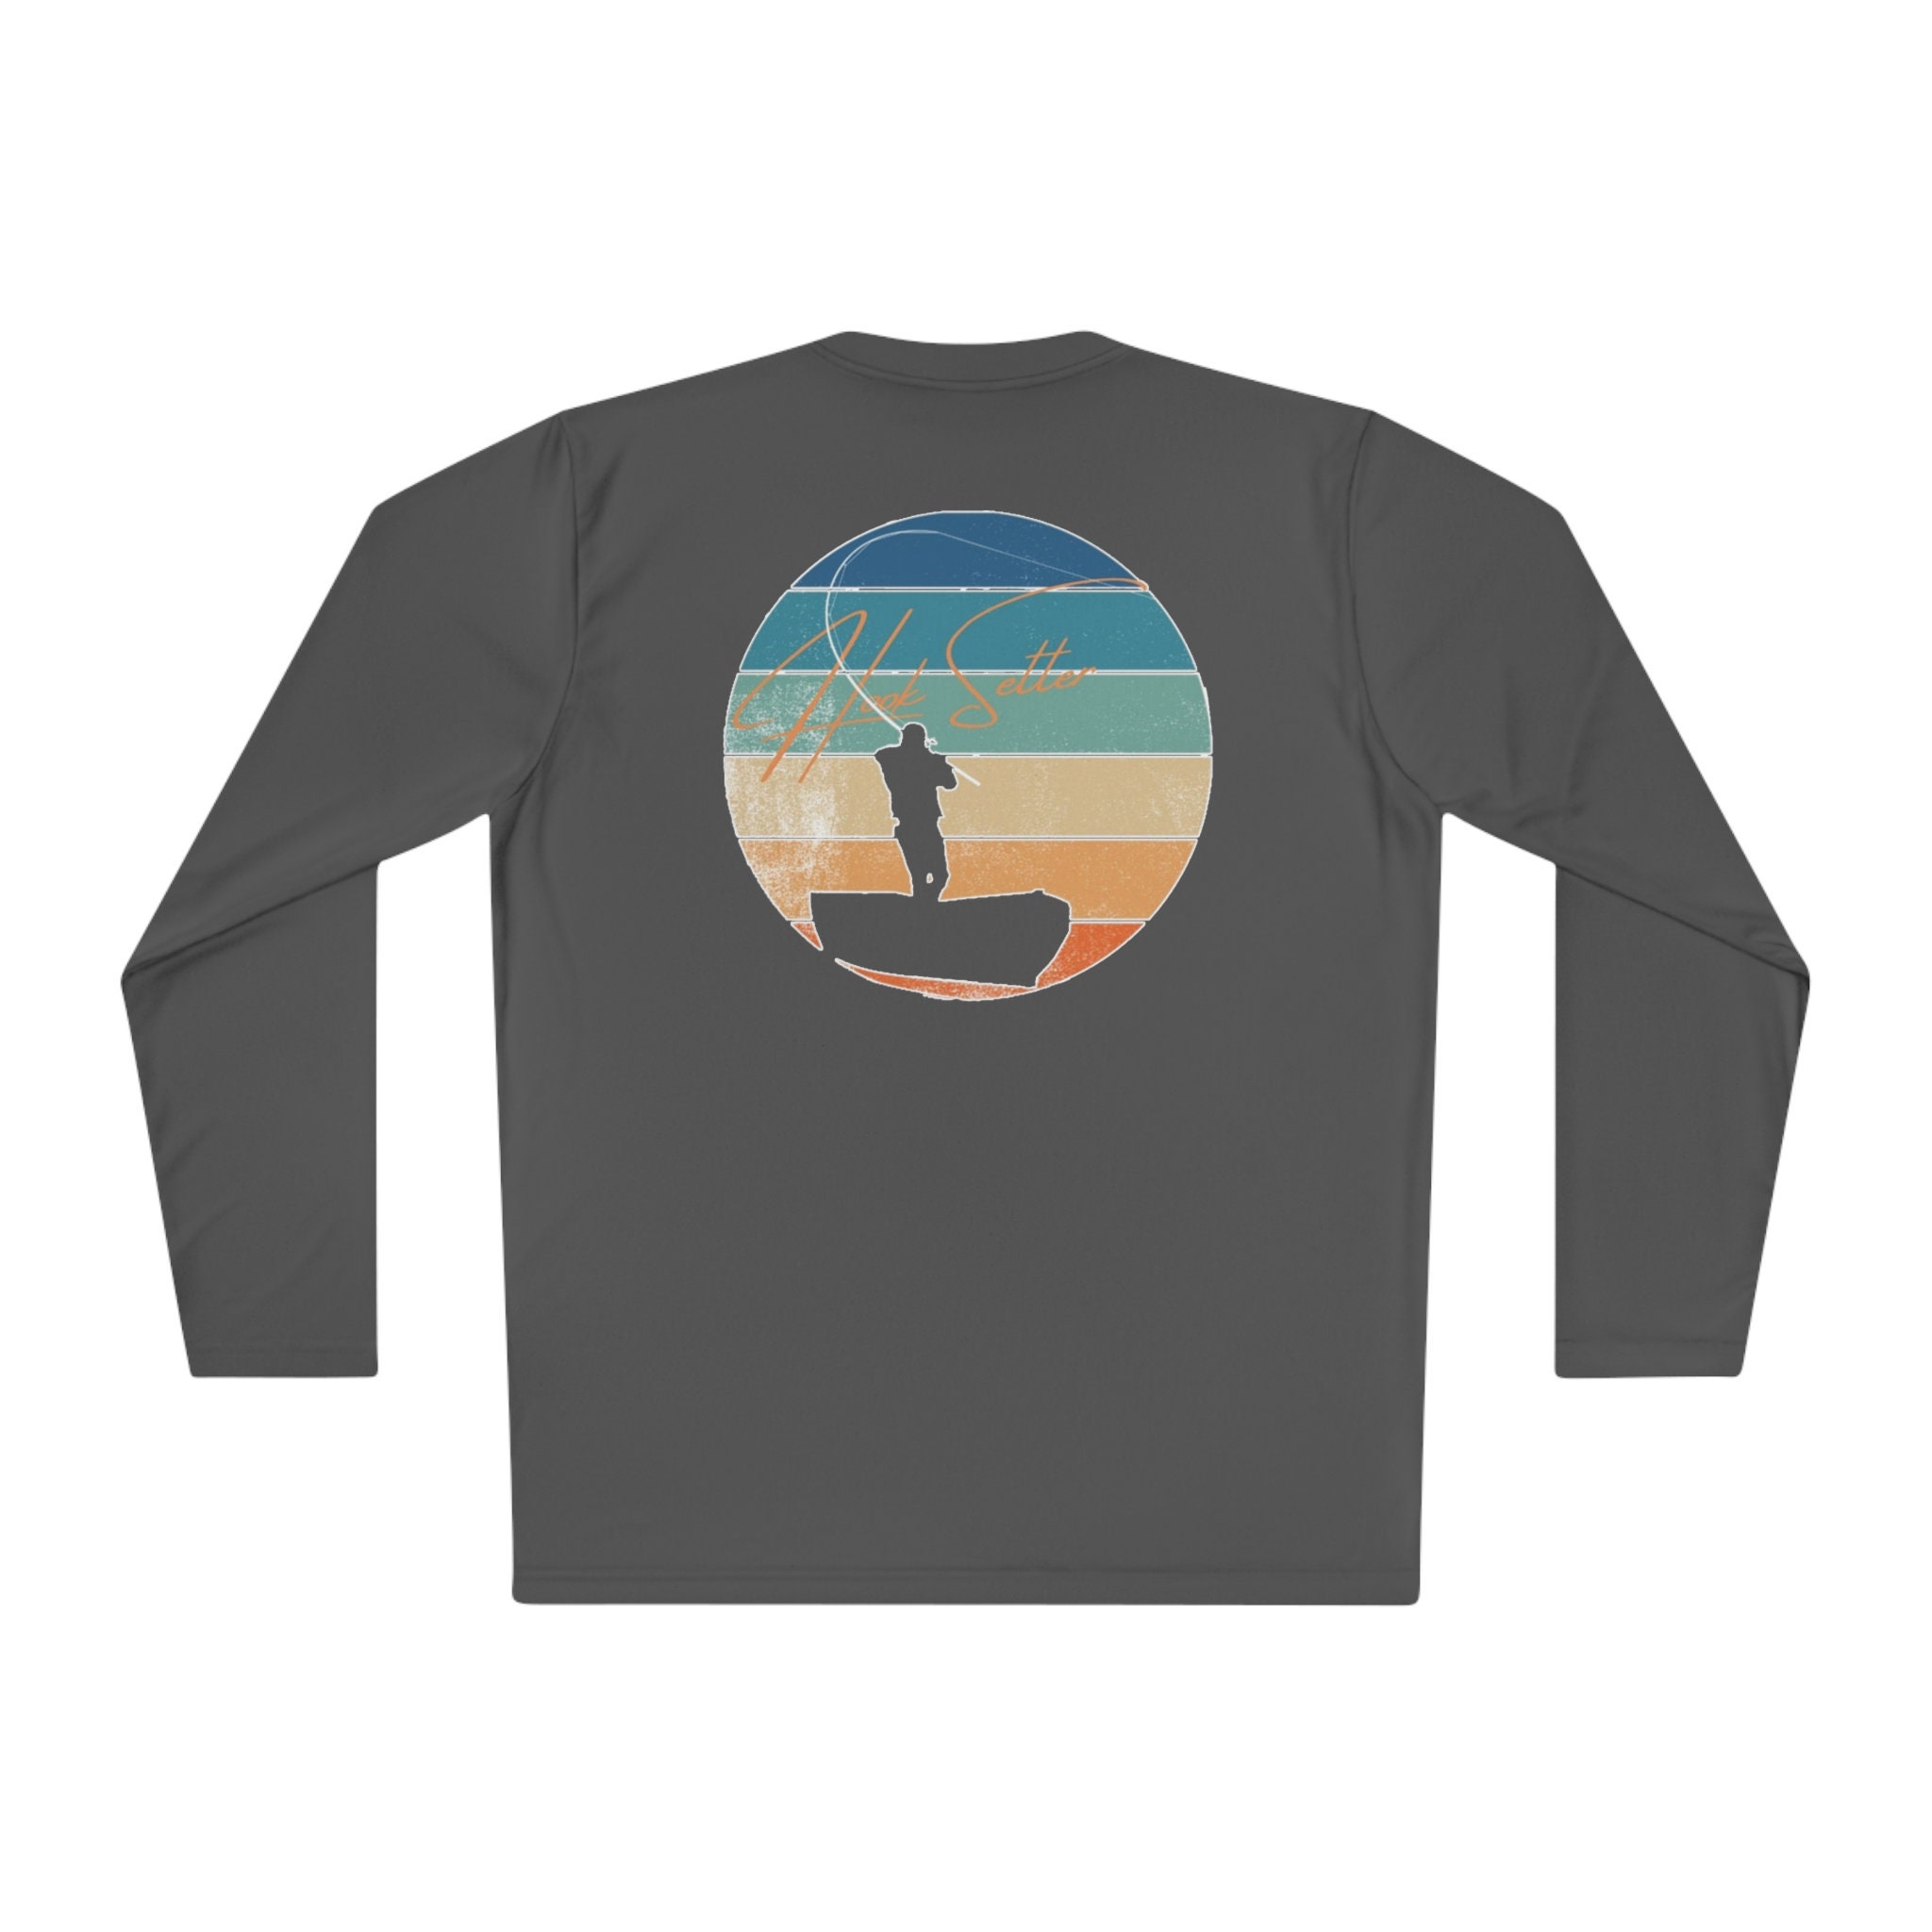 Personalized Fishing Shirts for Men Long Sleeve, UPF 50 Long